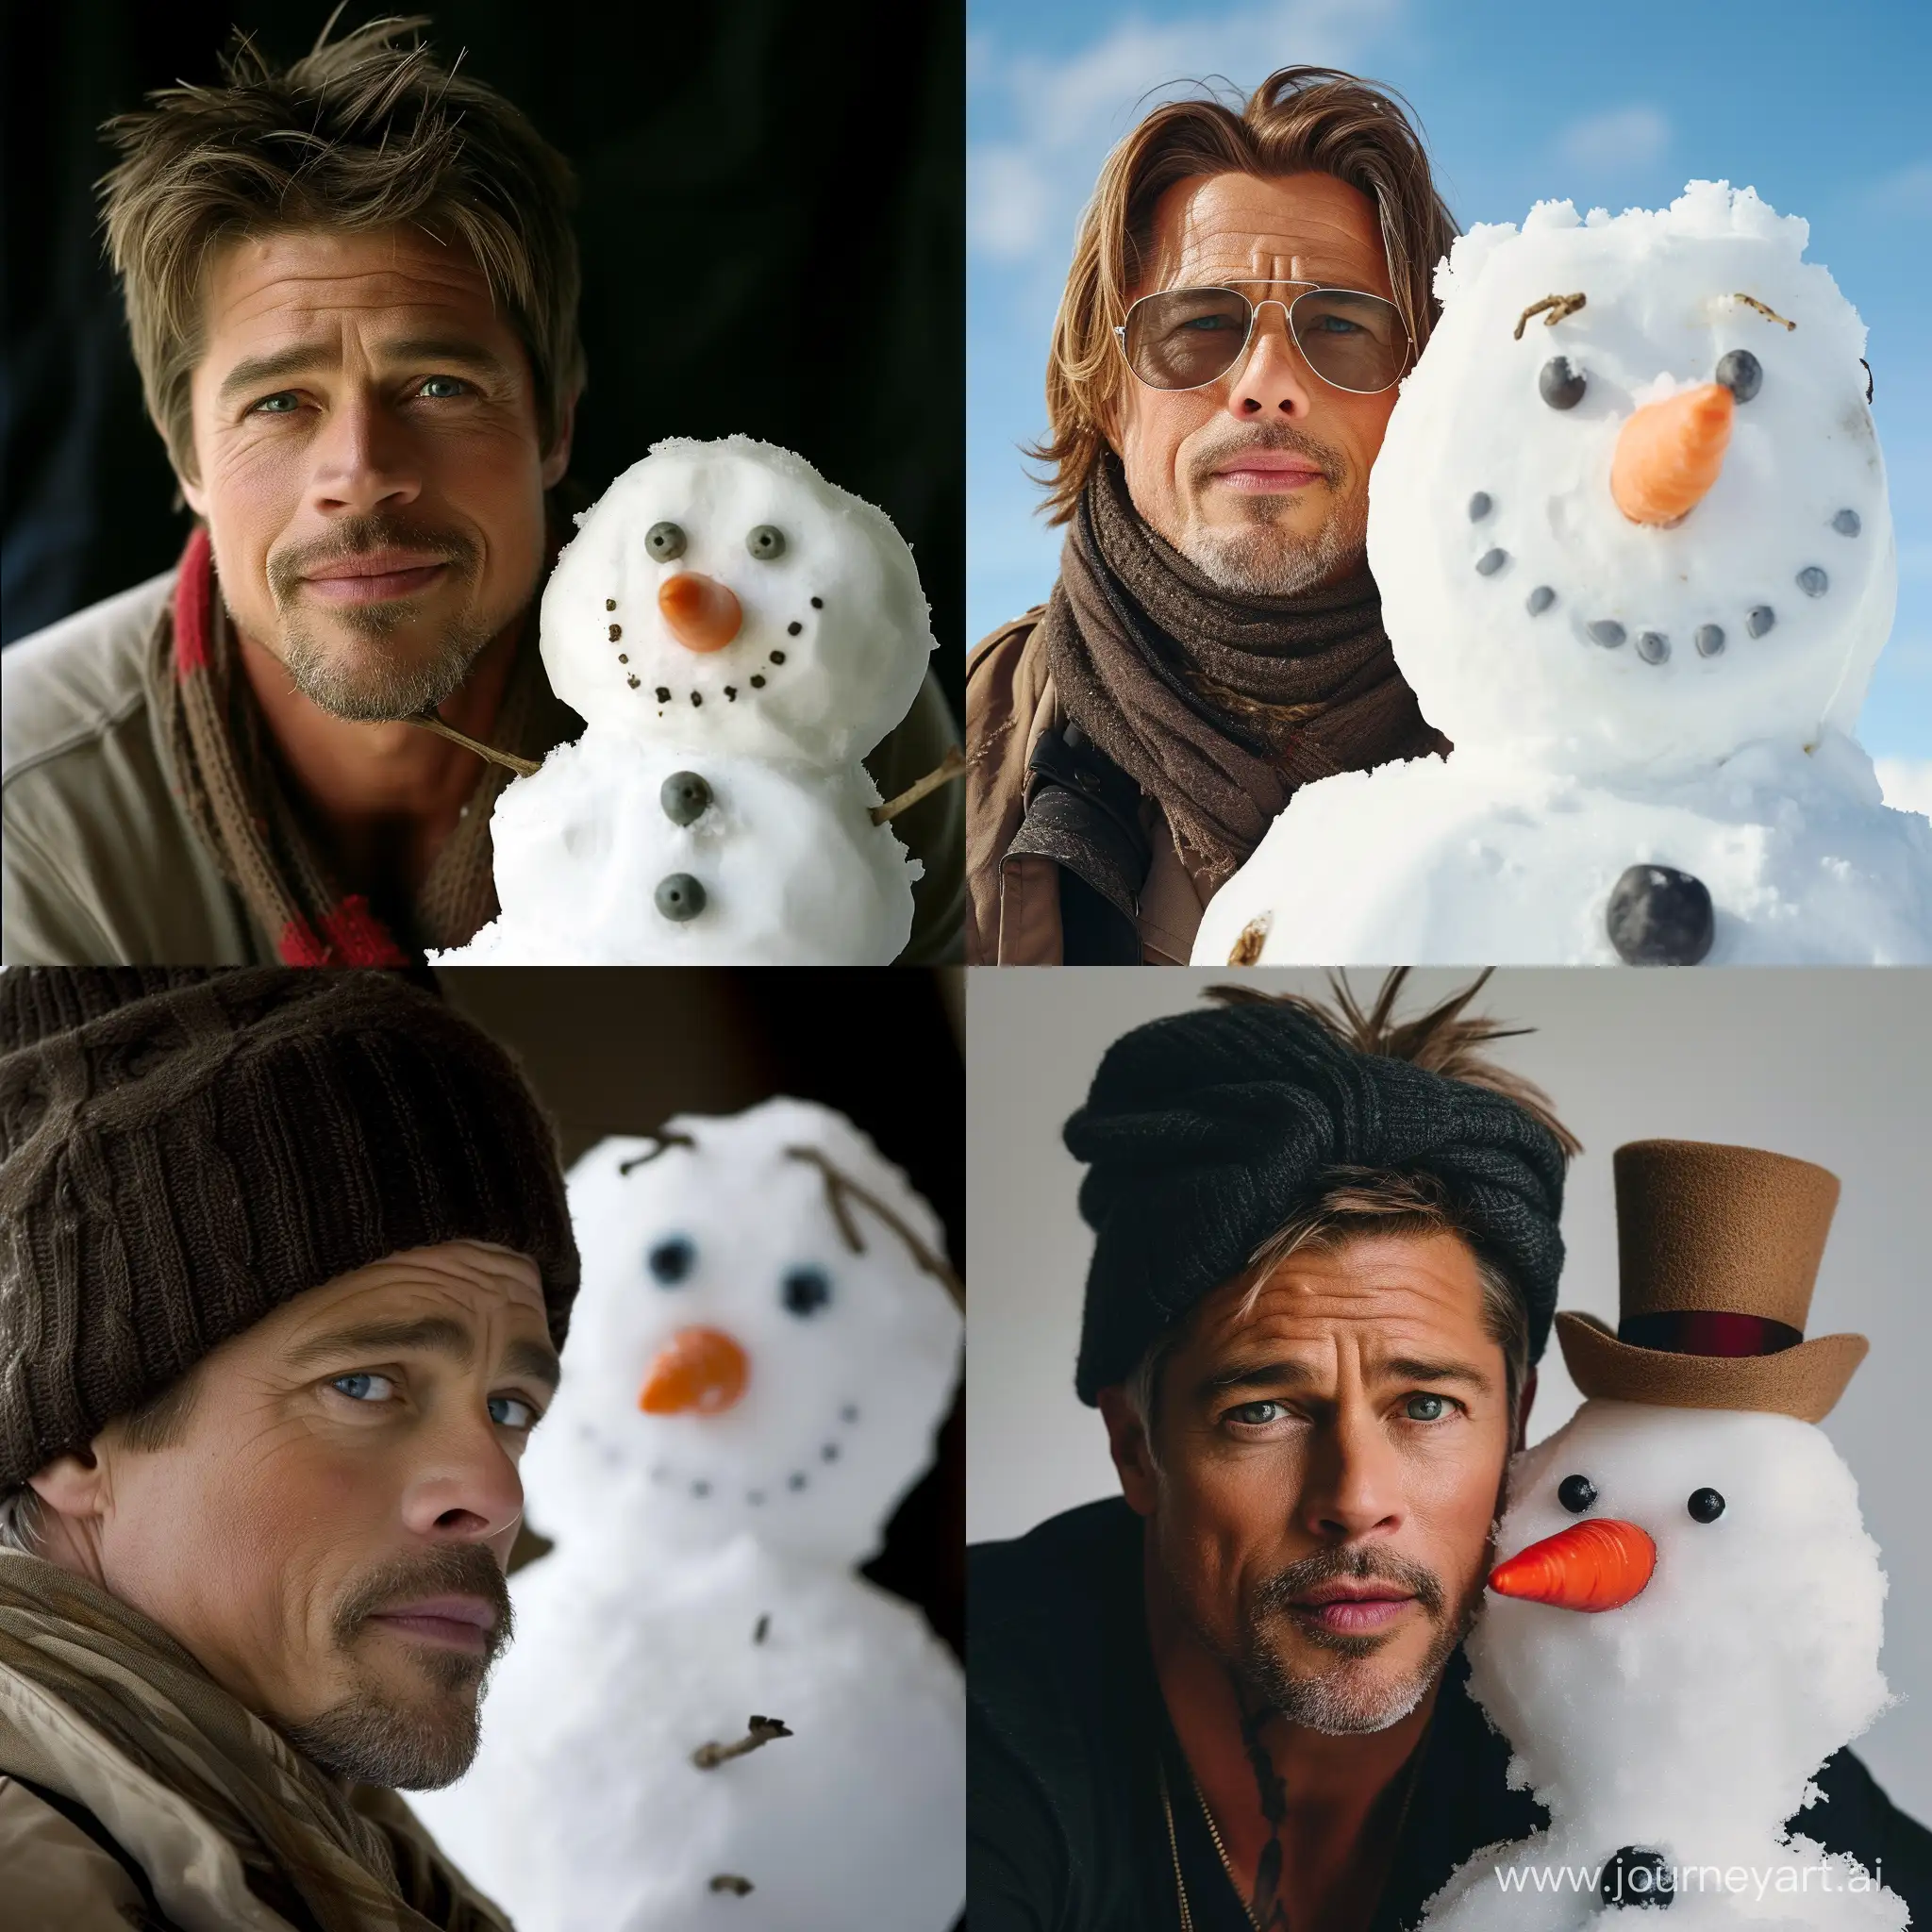 Brad-Pitt-and-Snowman-A-Charming-Winter-Portrait